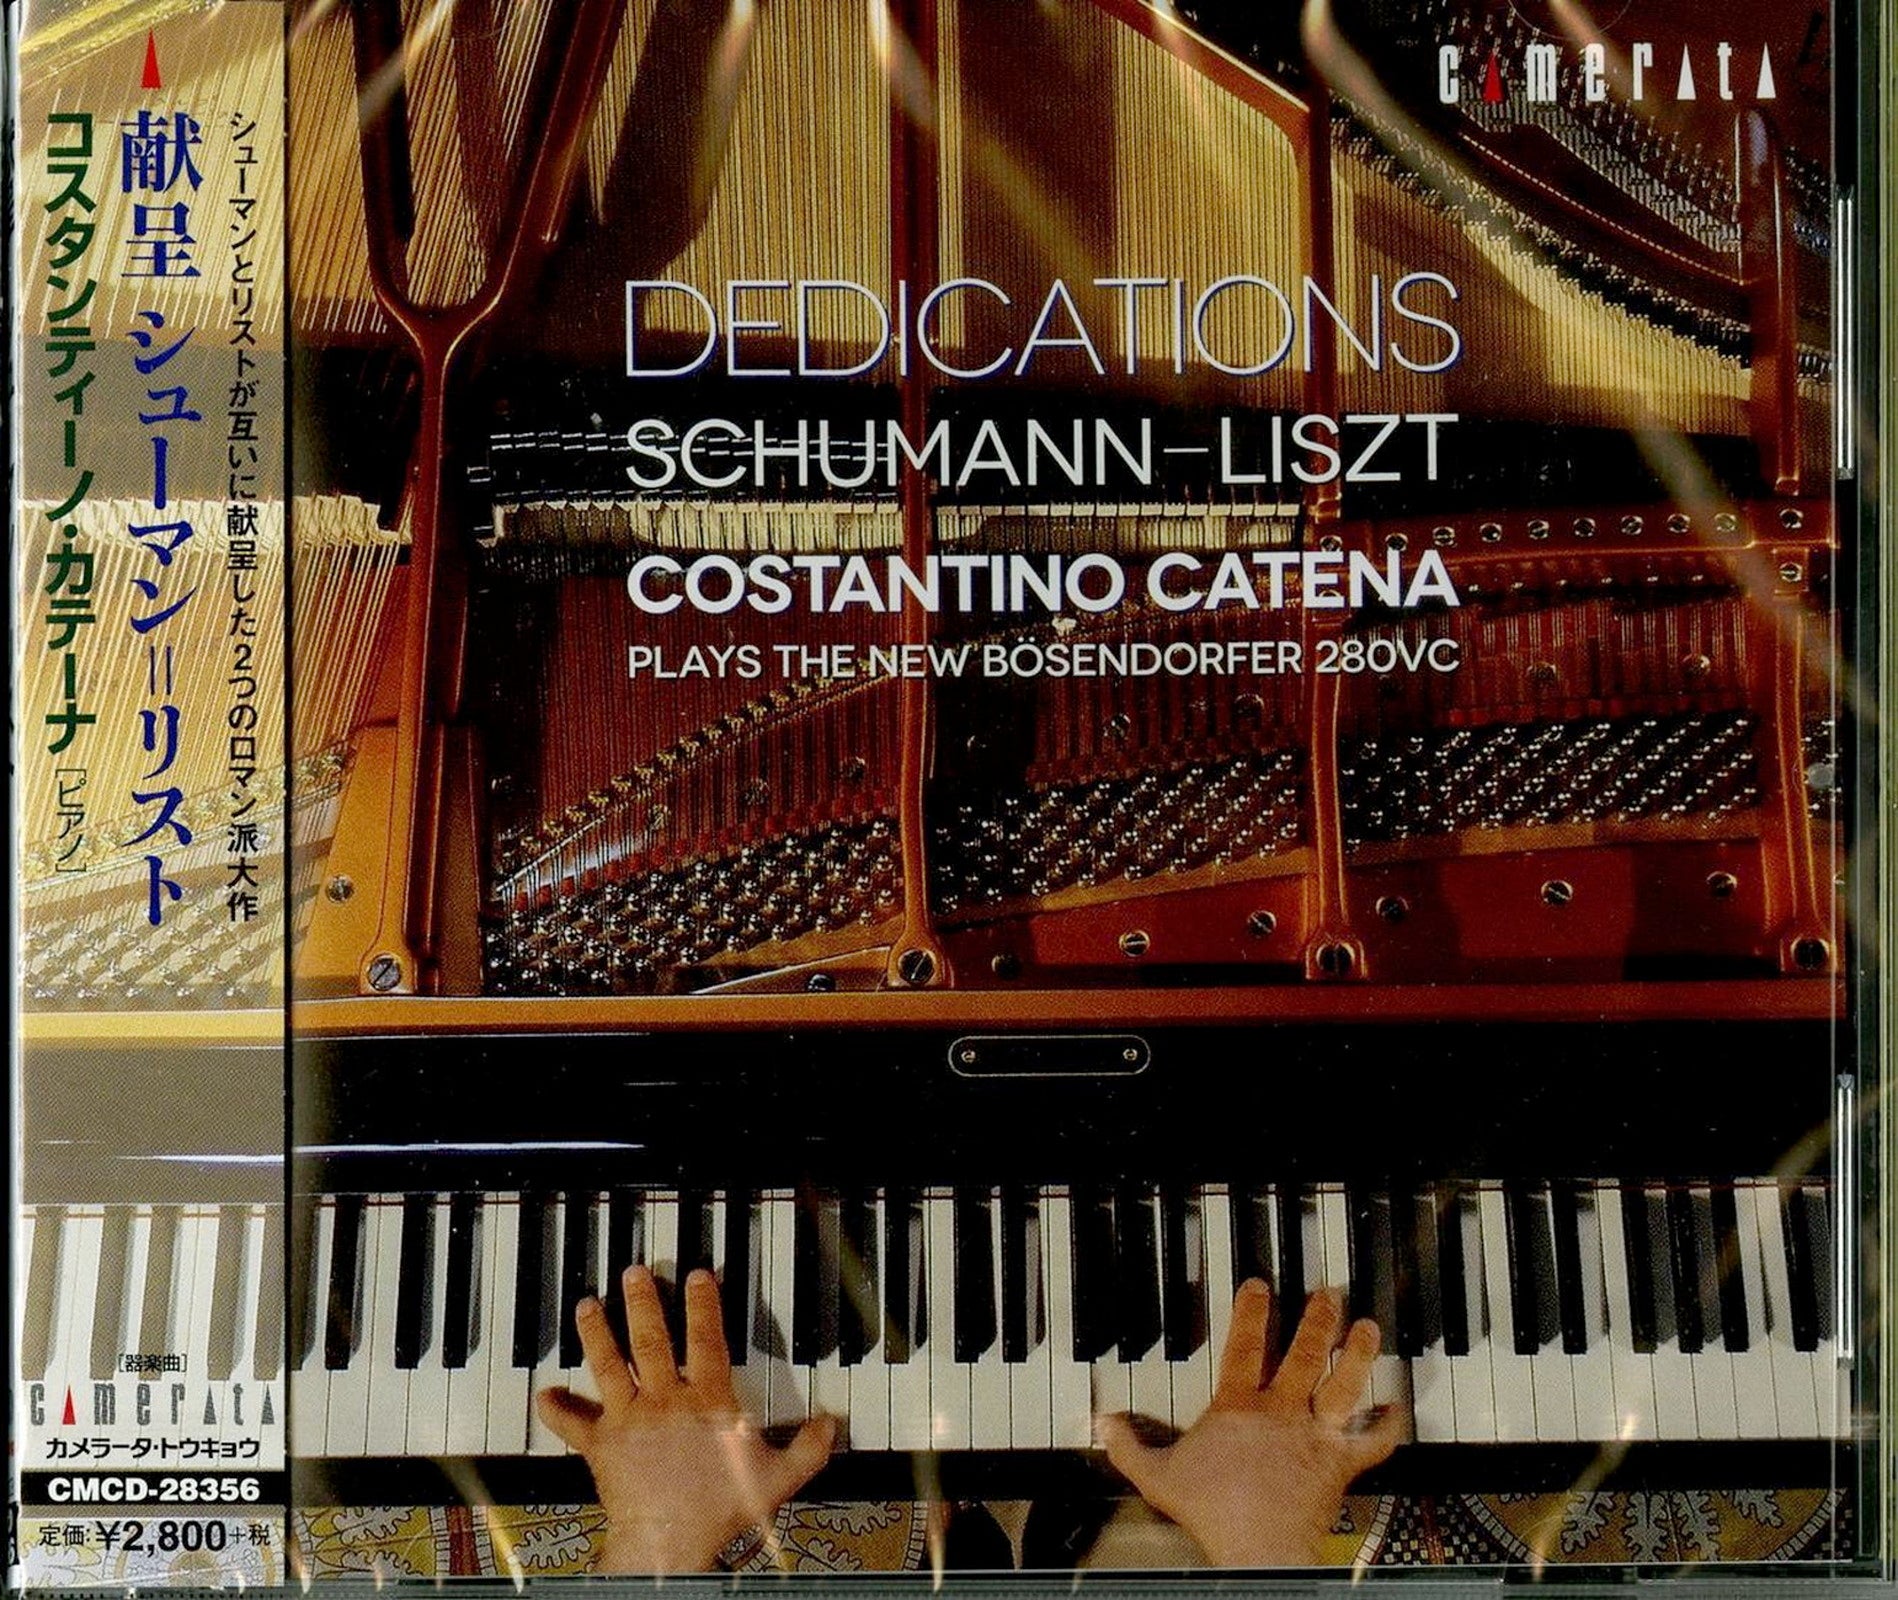 Costantino　CD,　Costantino　Store　Jewel　Catena　Piano　Japan　Dedications-Schumann-Liszt　Vinyl　Japan　2018,　Music,　case,　CD　–　CDs　Classical　Catena,　CDs